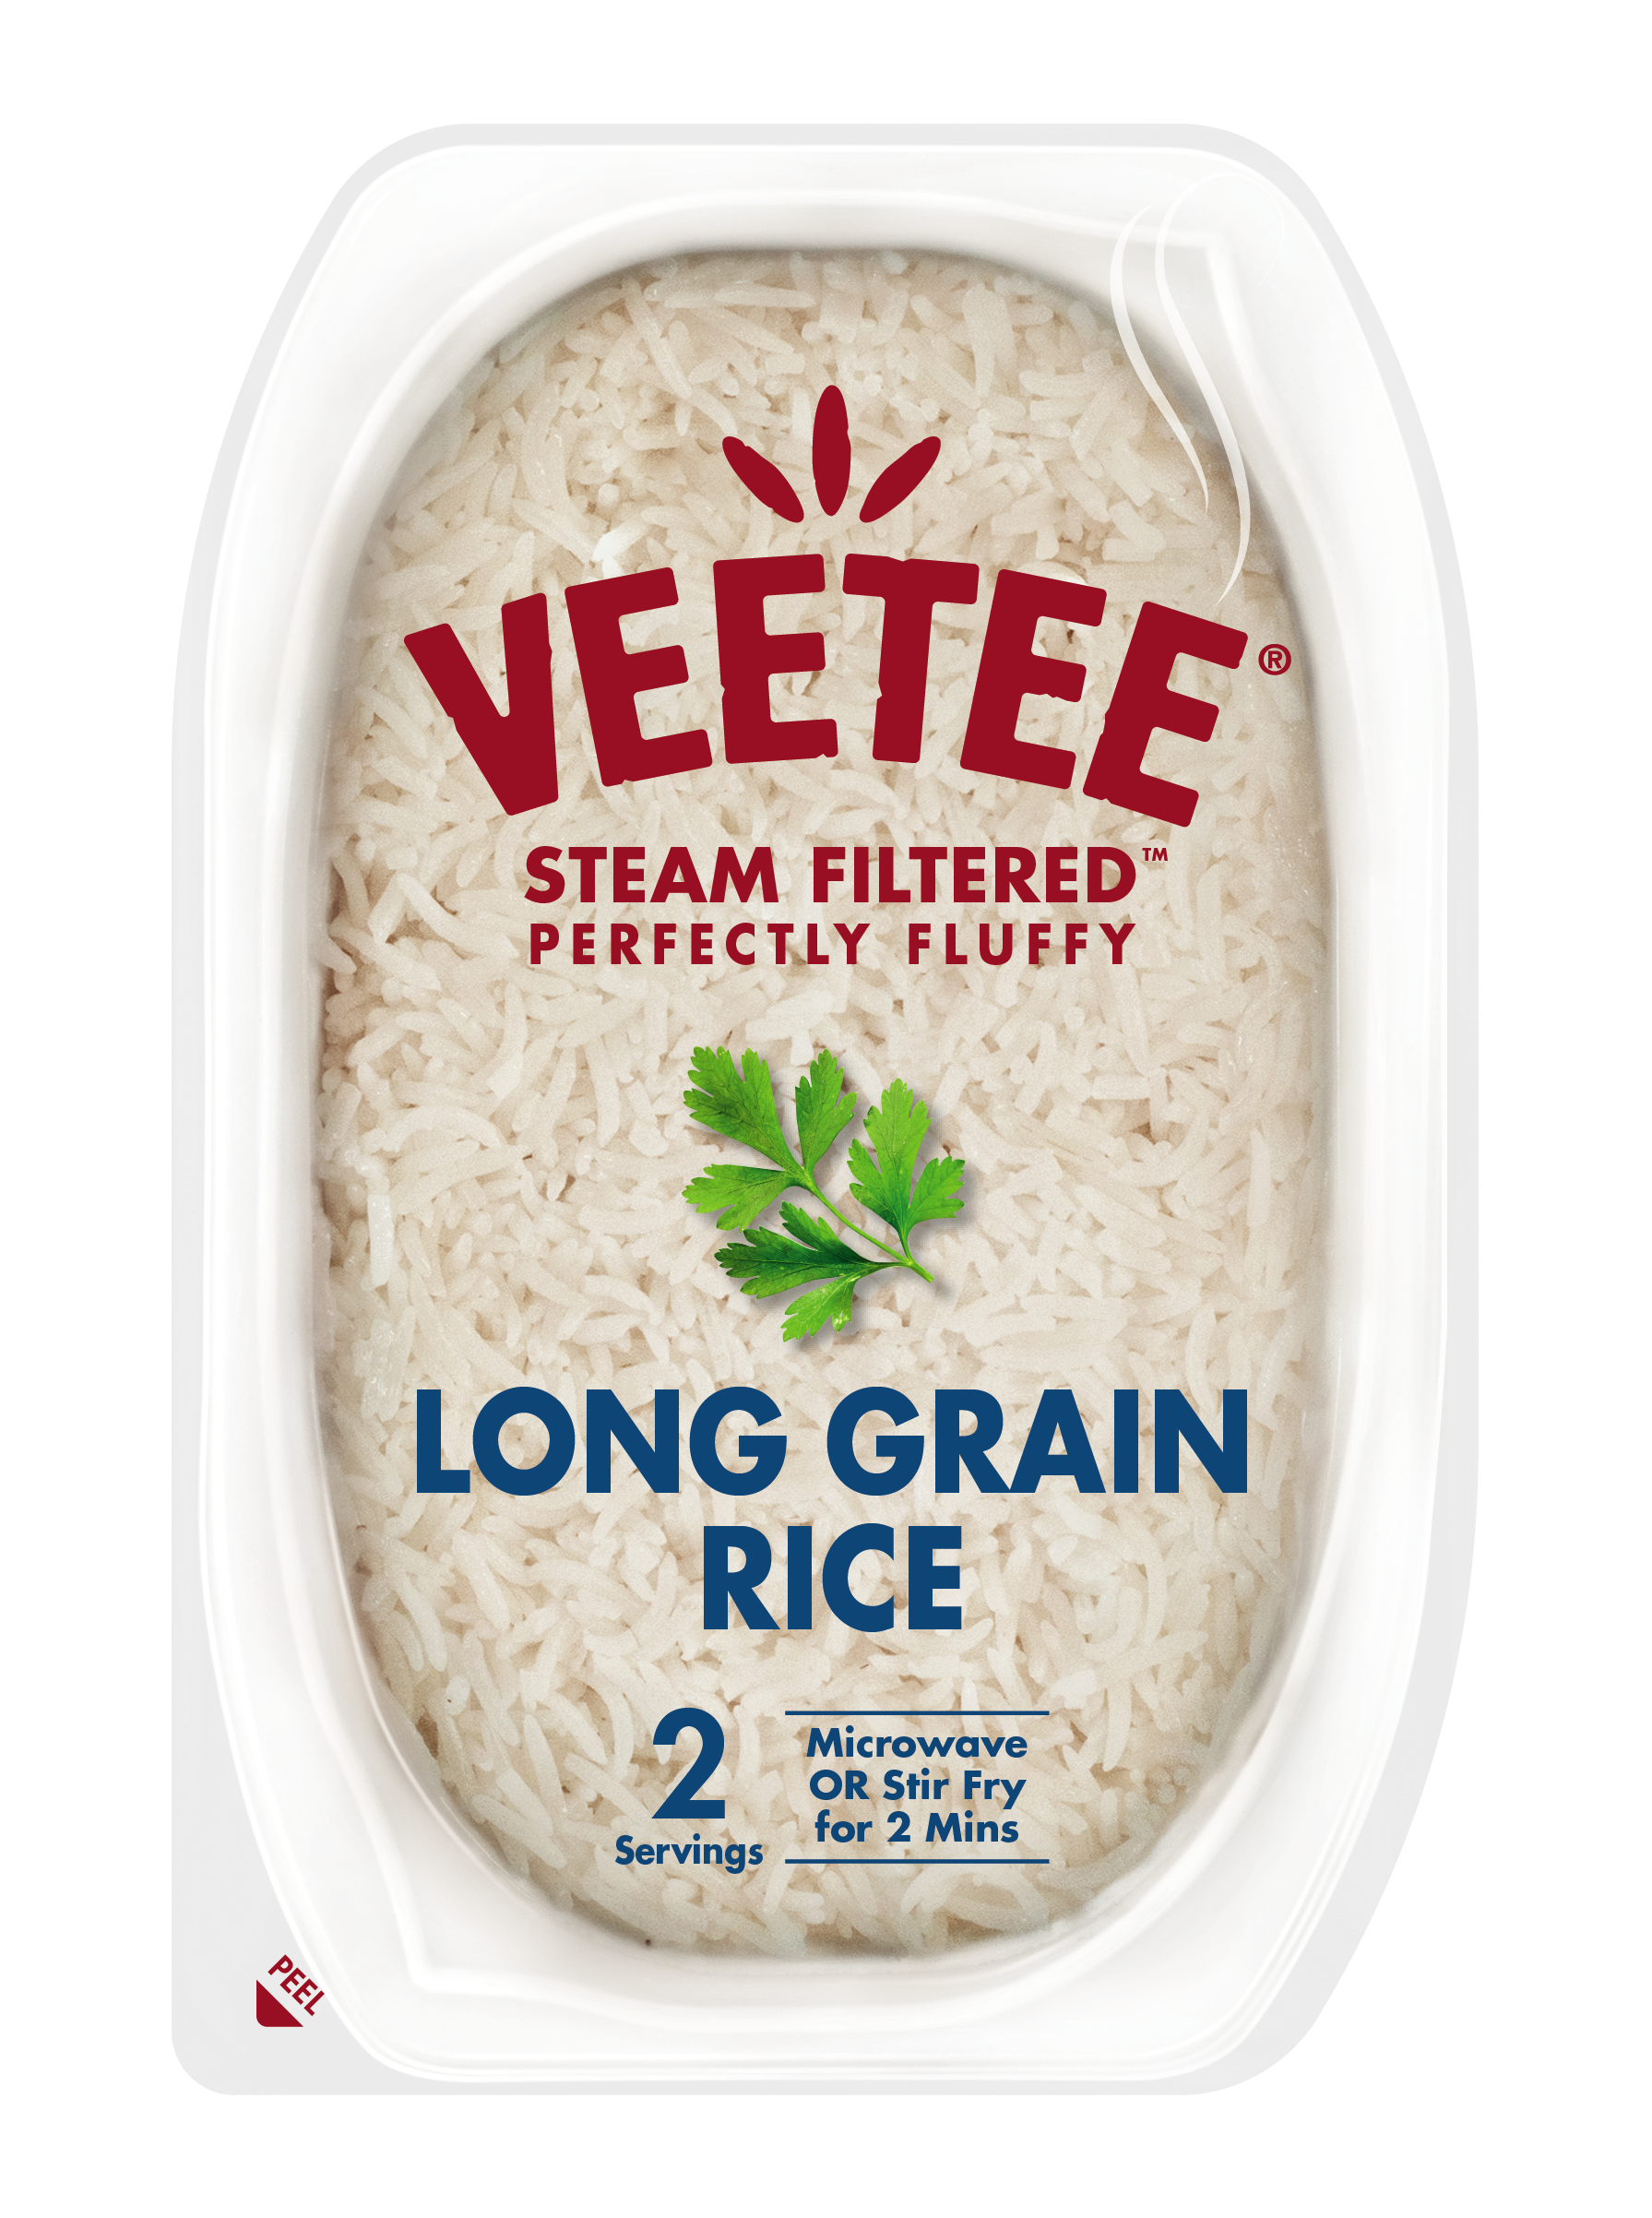 veetee_steam_filtered_long_grain_single.png